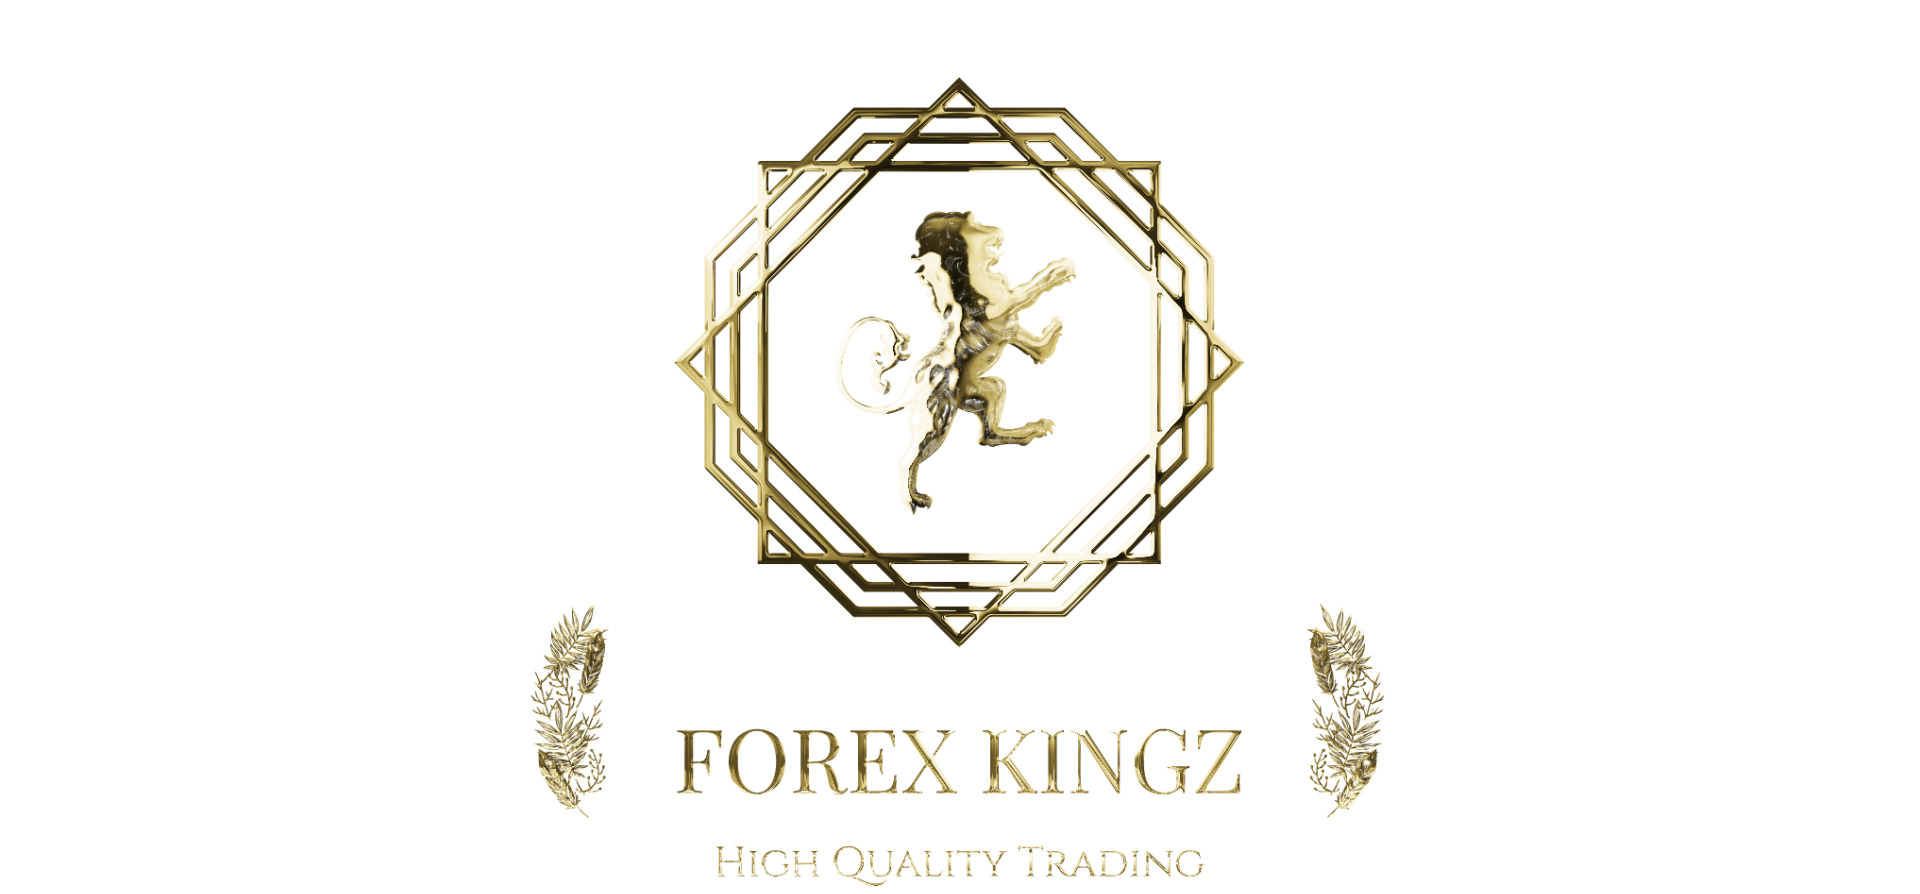 Forex Kingz